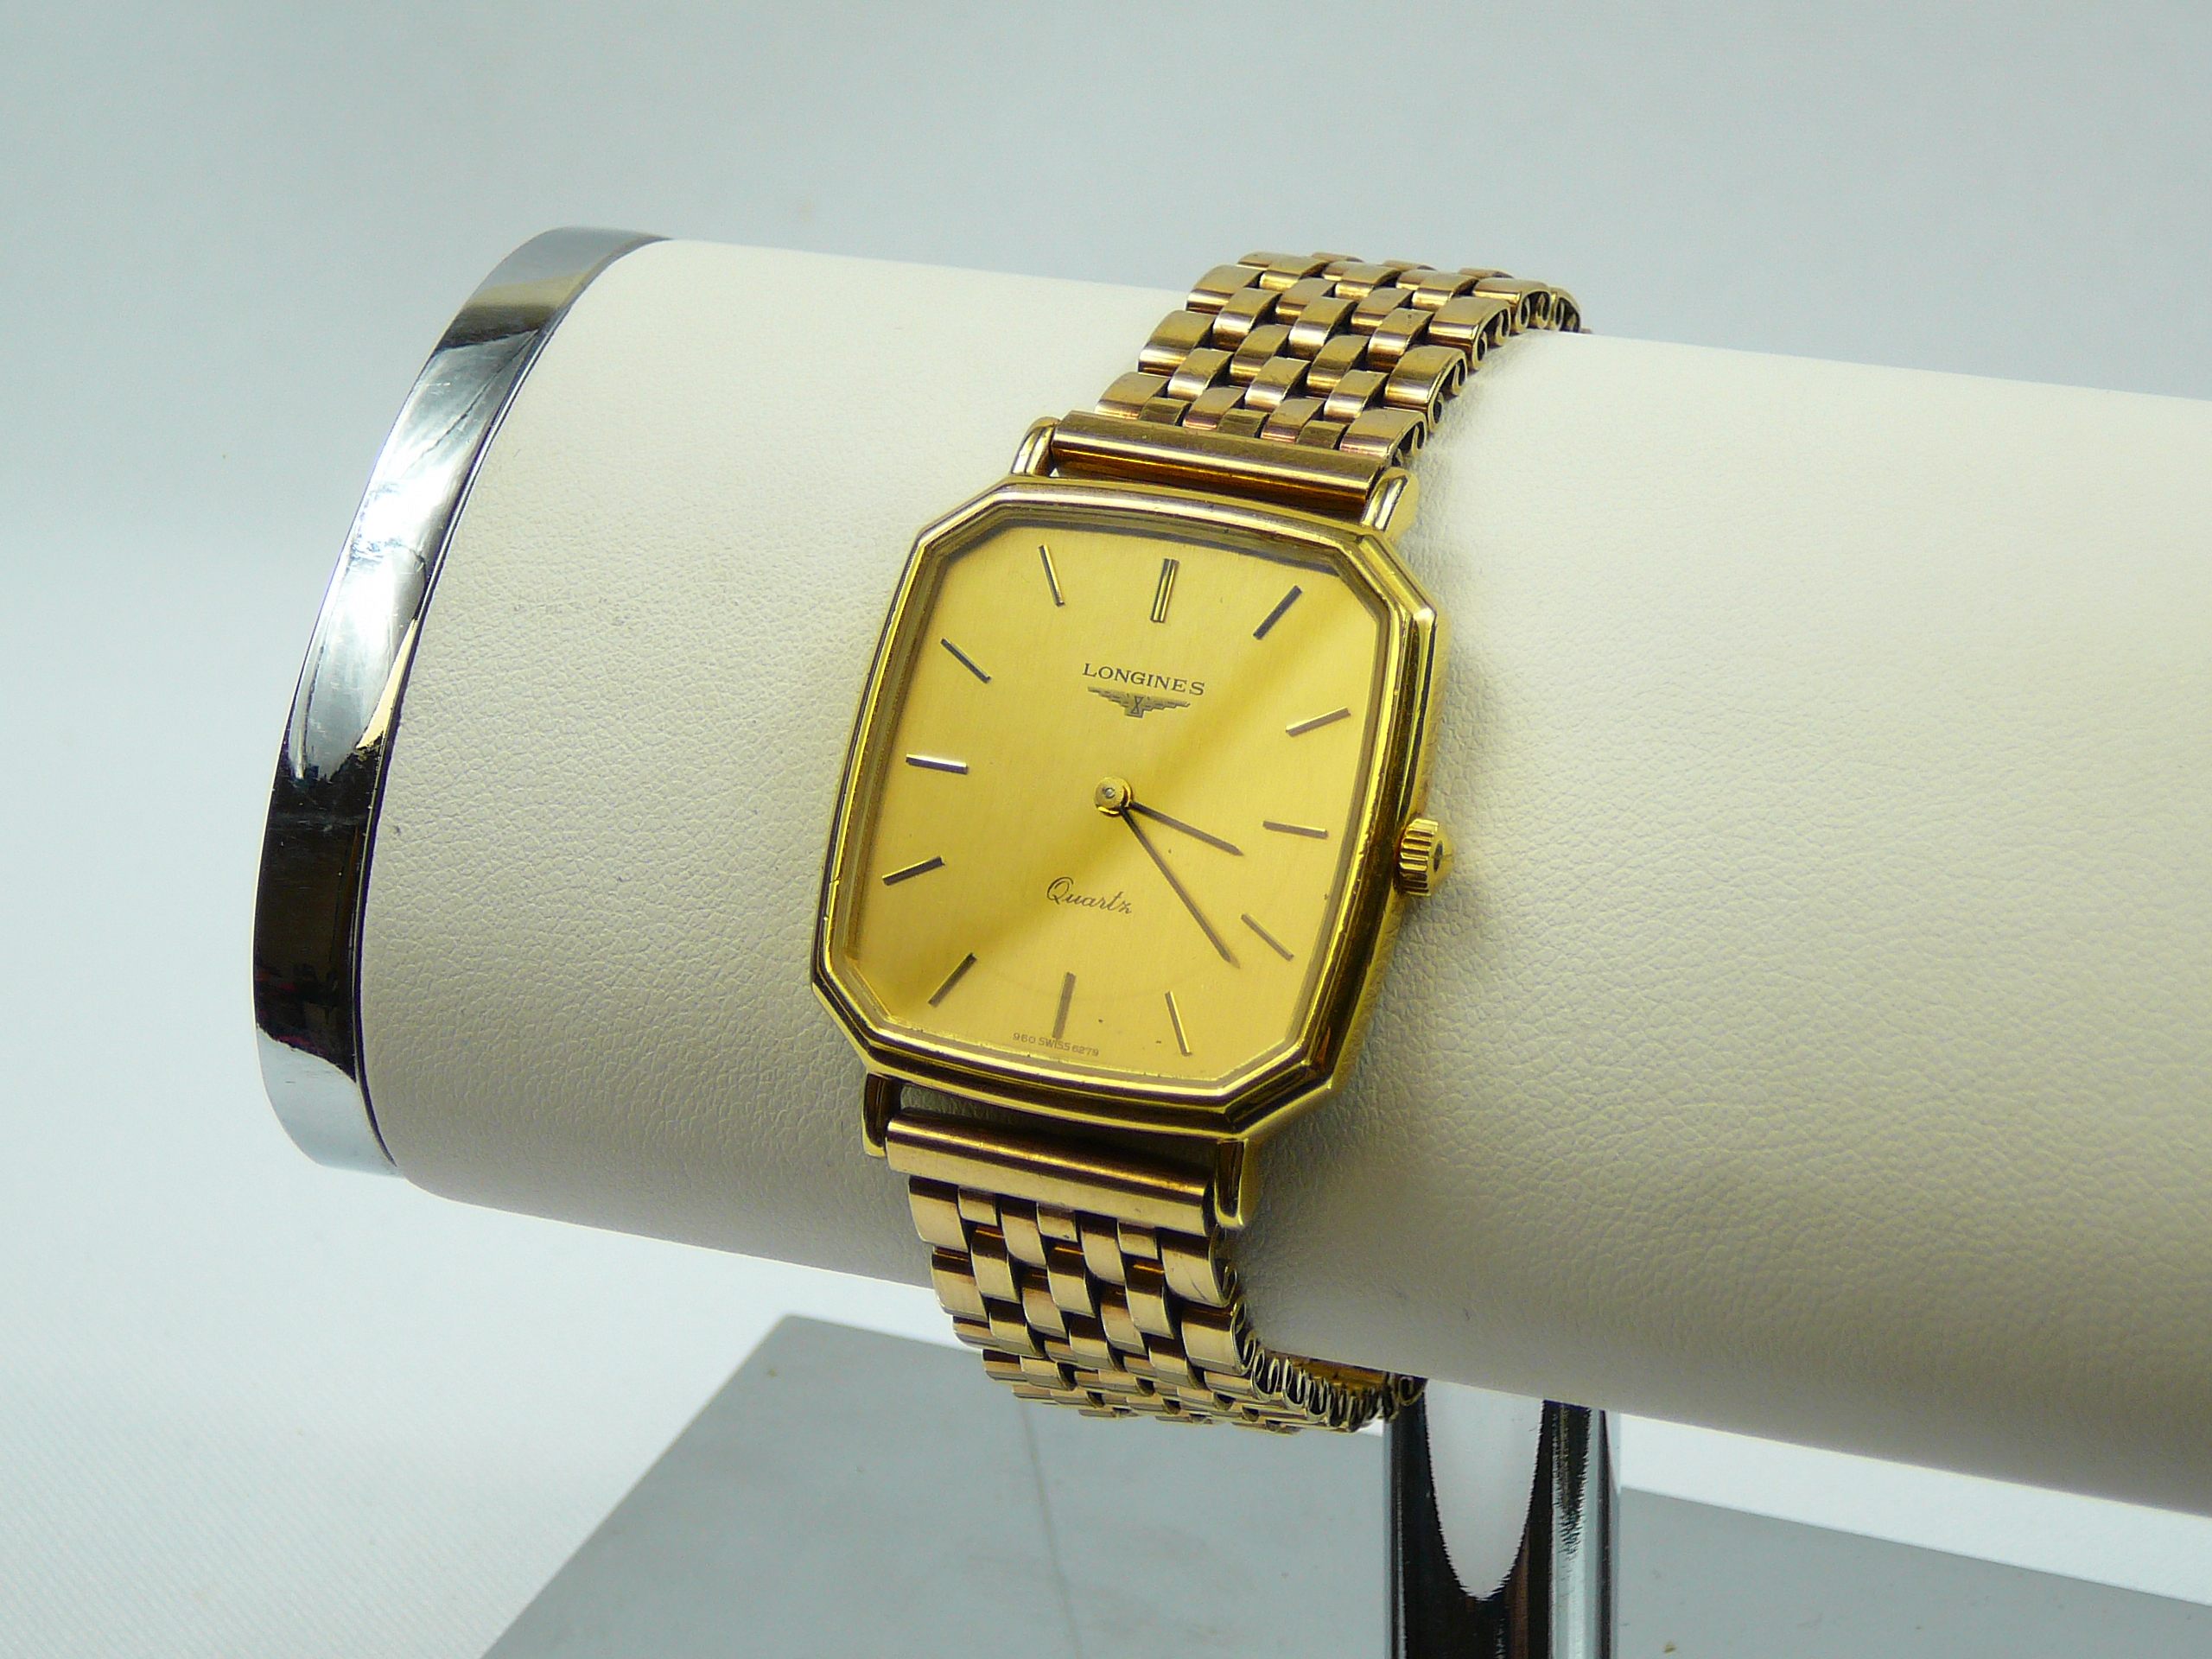 Gents Longines wrist watch on gold bracelet